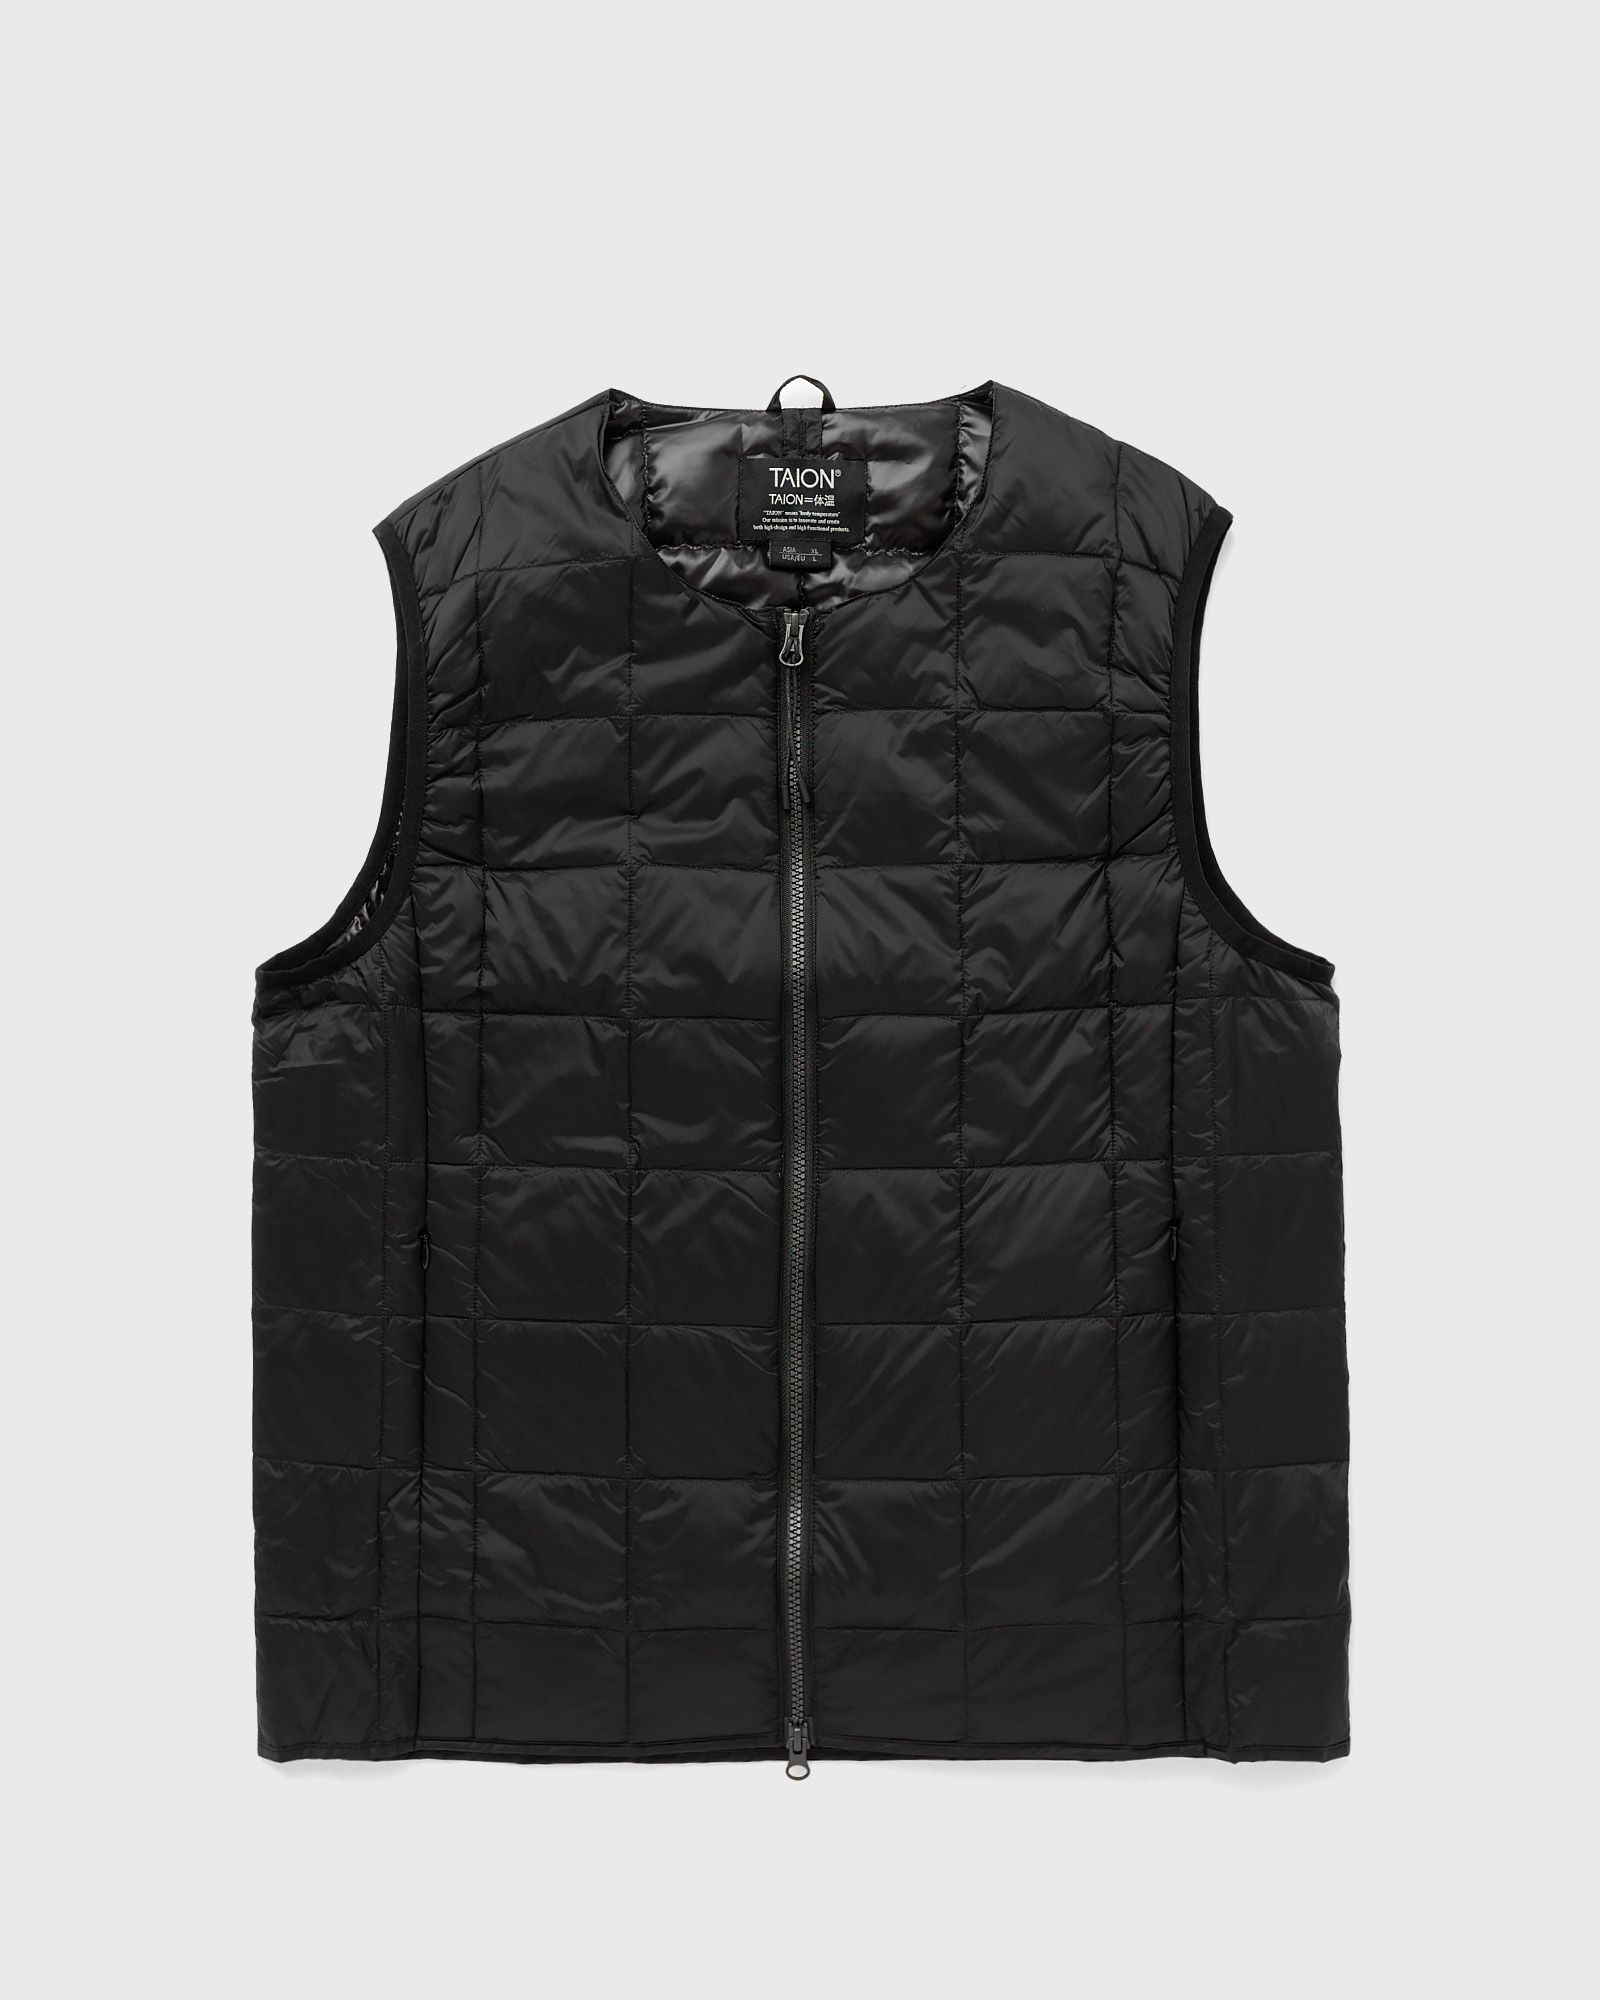 Taion - crew-neck w-zip down vest men vests black in größe:l